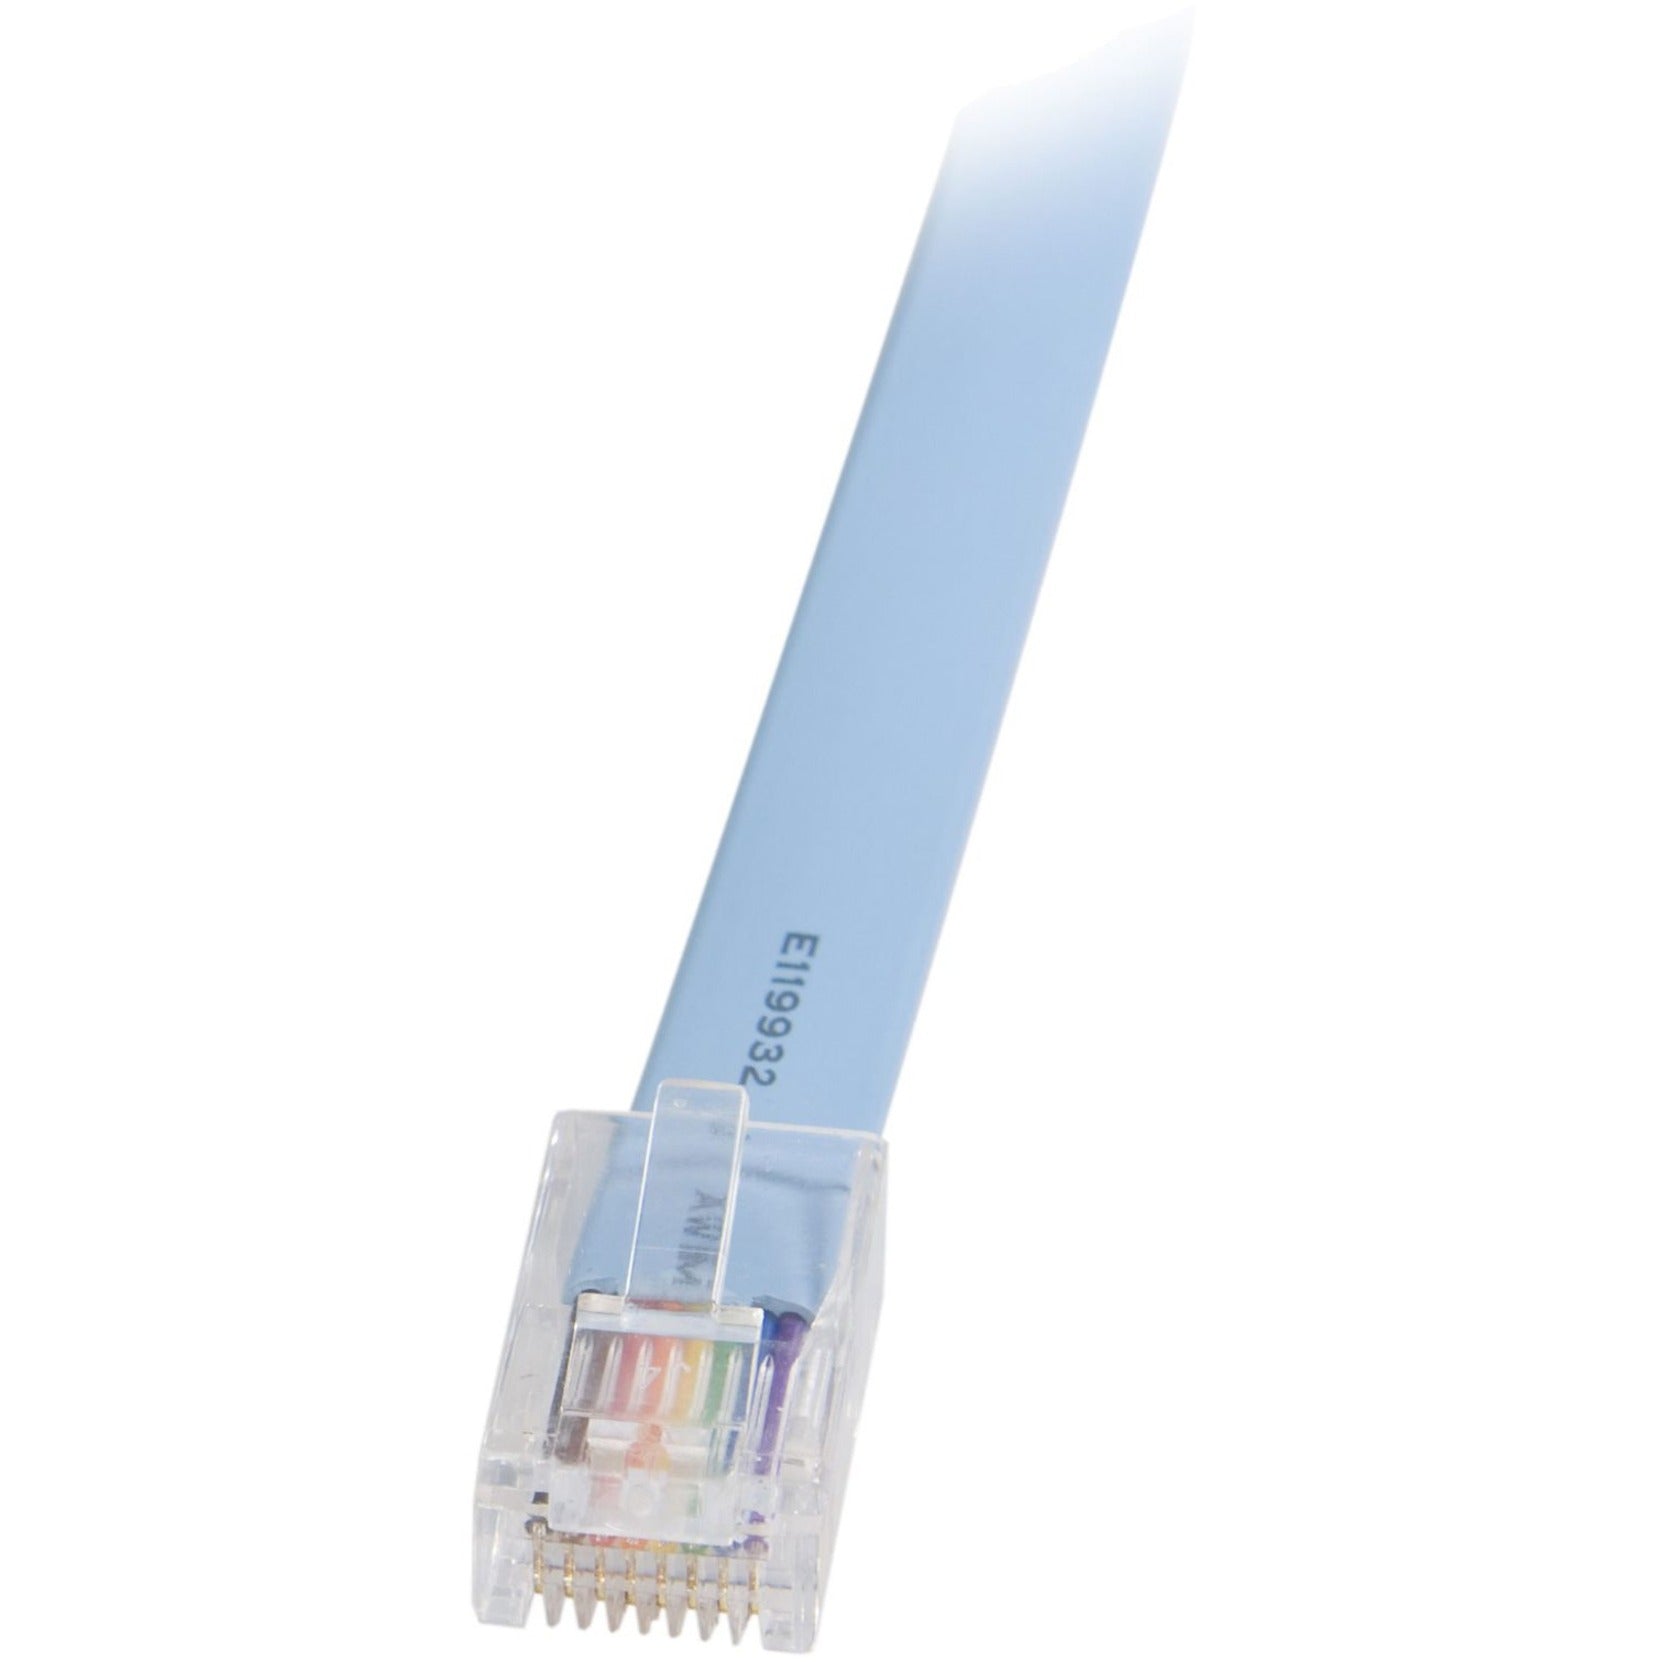 StarTech.com DB9CONCABL6 Cisco Console Router Cable - RJ45 (m) - DB9 (f) - 6 ft, Copper Conductor, Blue